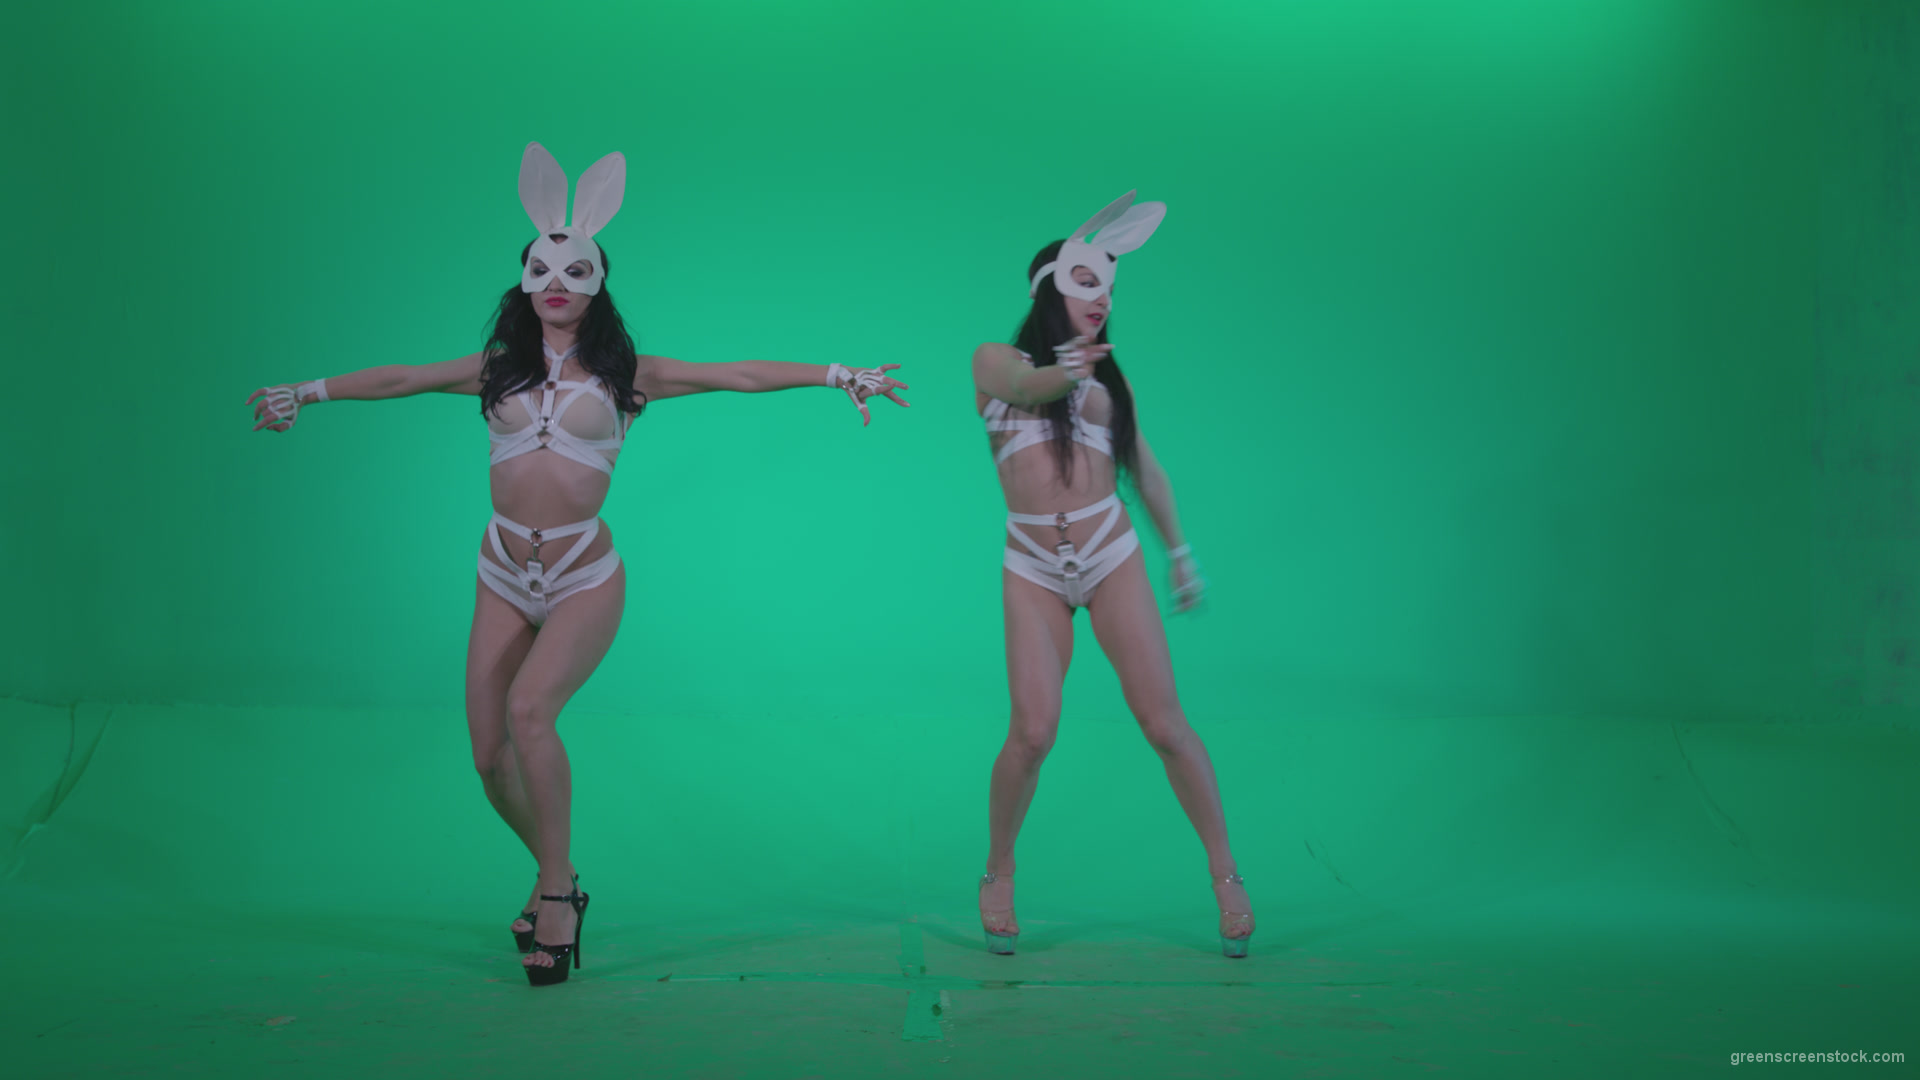 Go-go-Dancer-White-Rabbit-m1-Green-Screen-Video-Footage_009 Green Screen Stock